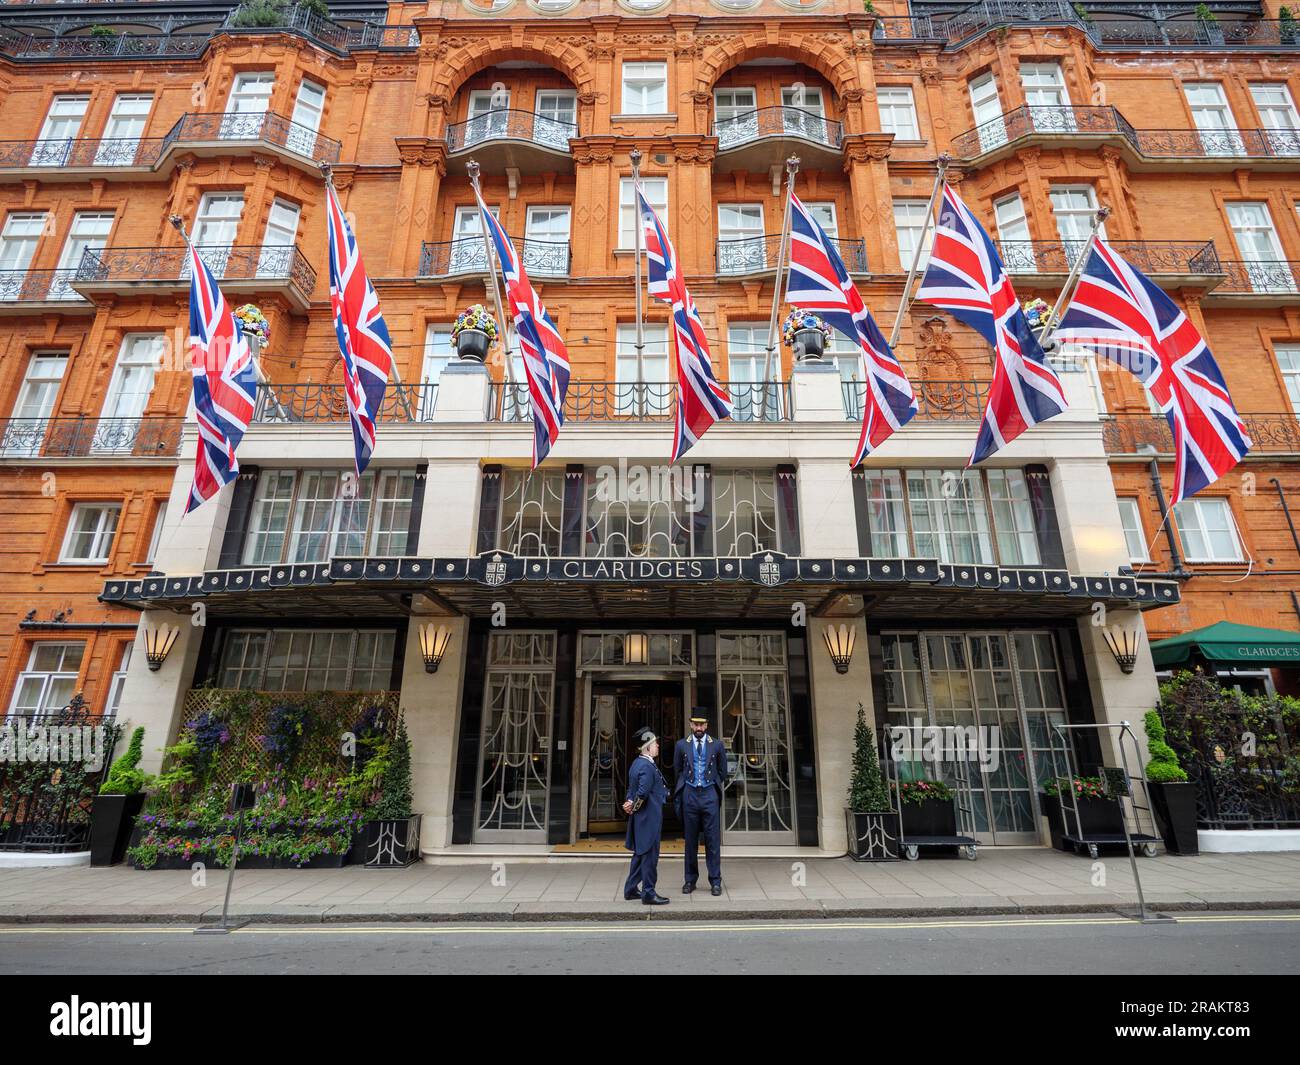 Doormen standing outside Claridge’s Hotel, London, UK Stock Photo